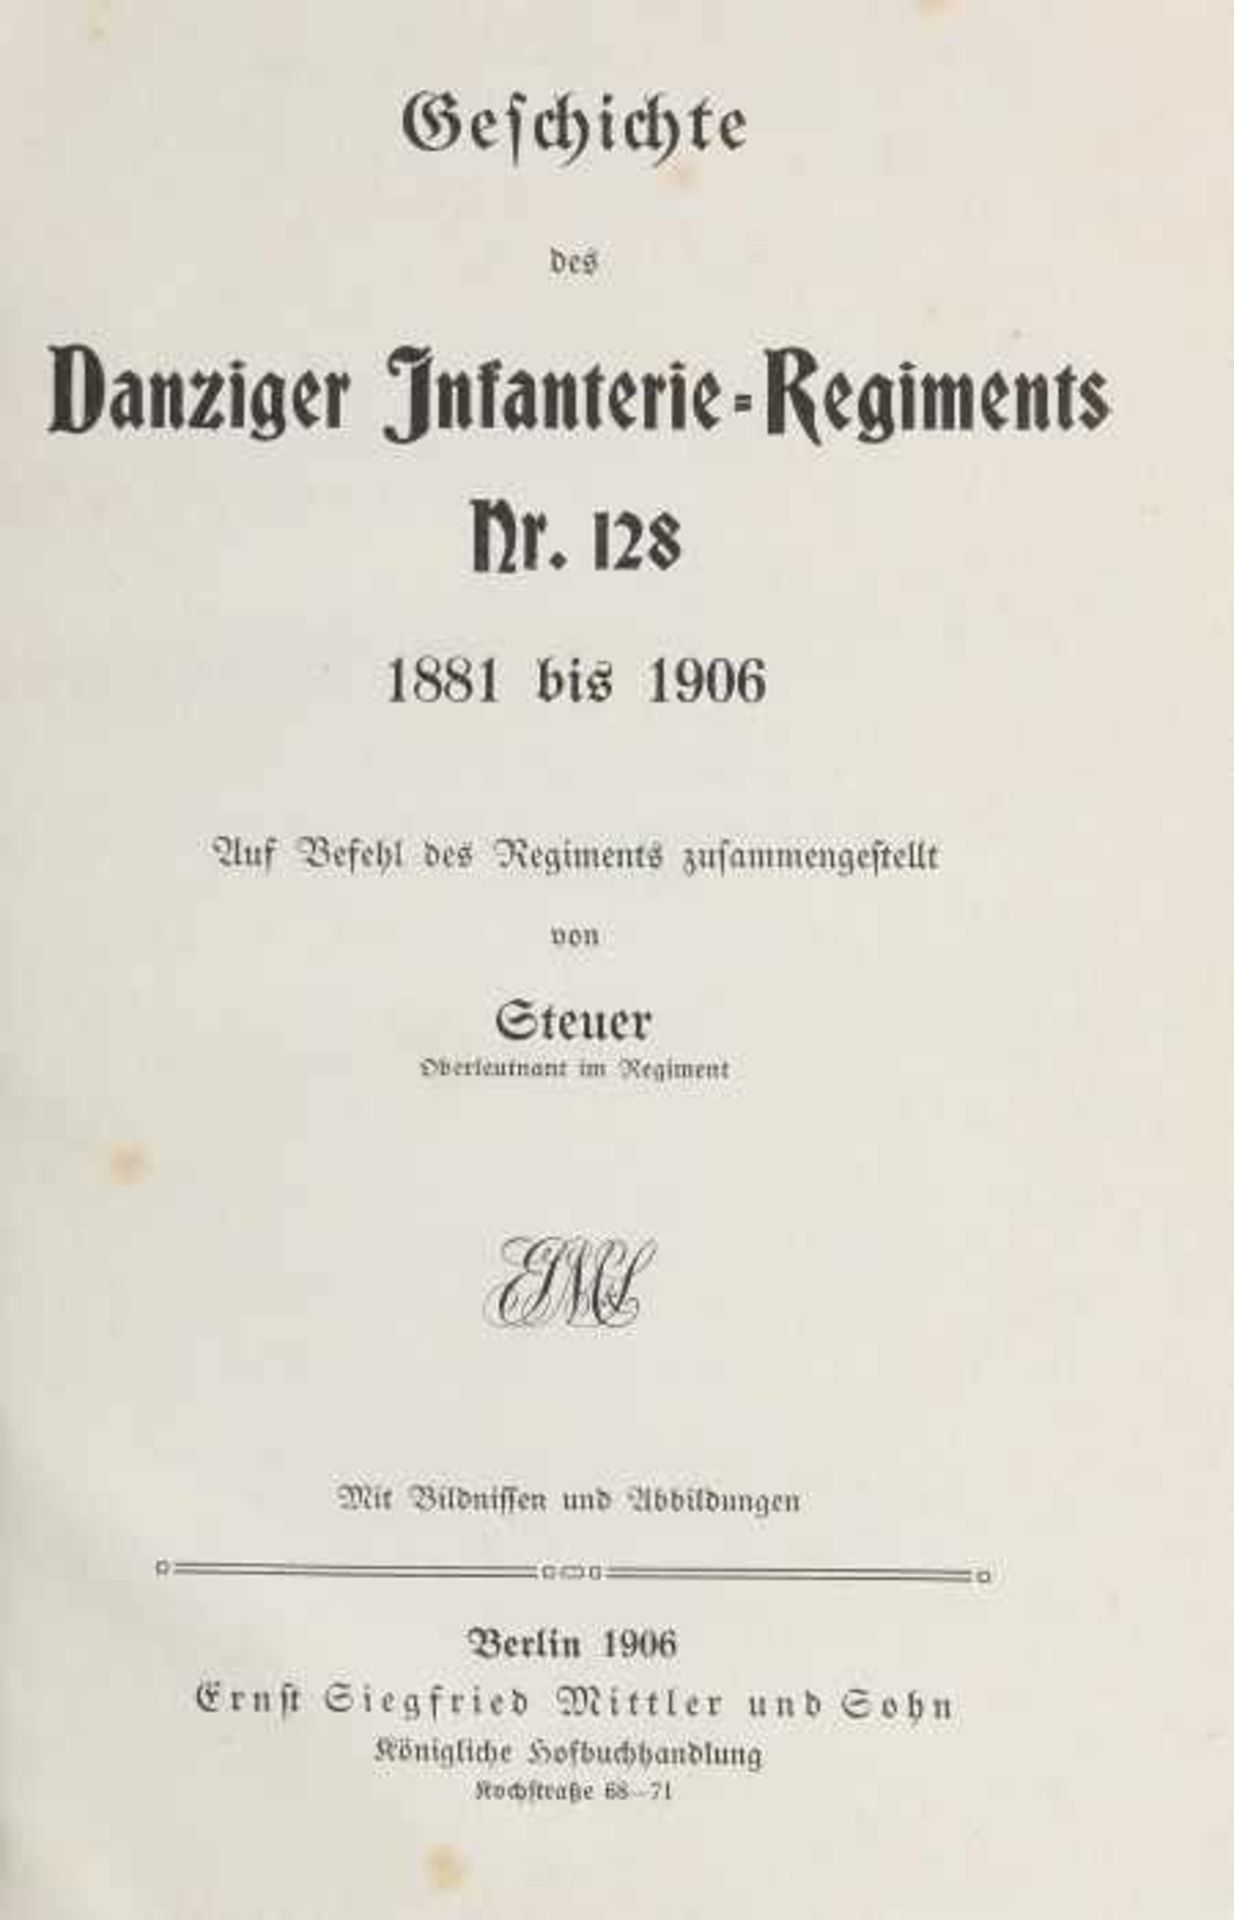 Steuer, Gottfried Geschichte des Danziger Infanterie-Regiments Nr. 128 1881 bis 1906, Berlin, - Image 2 of 2